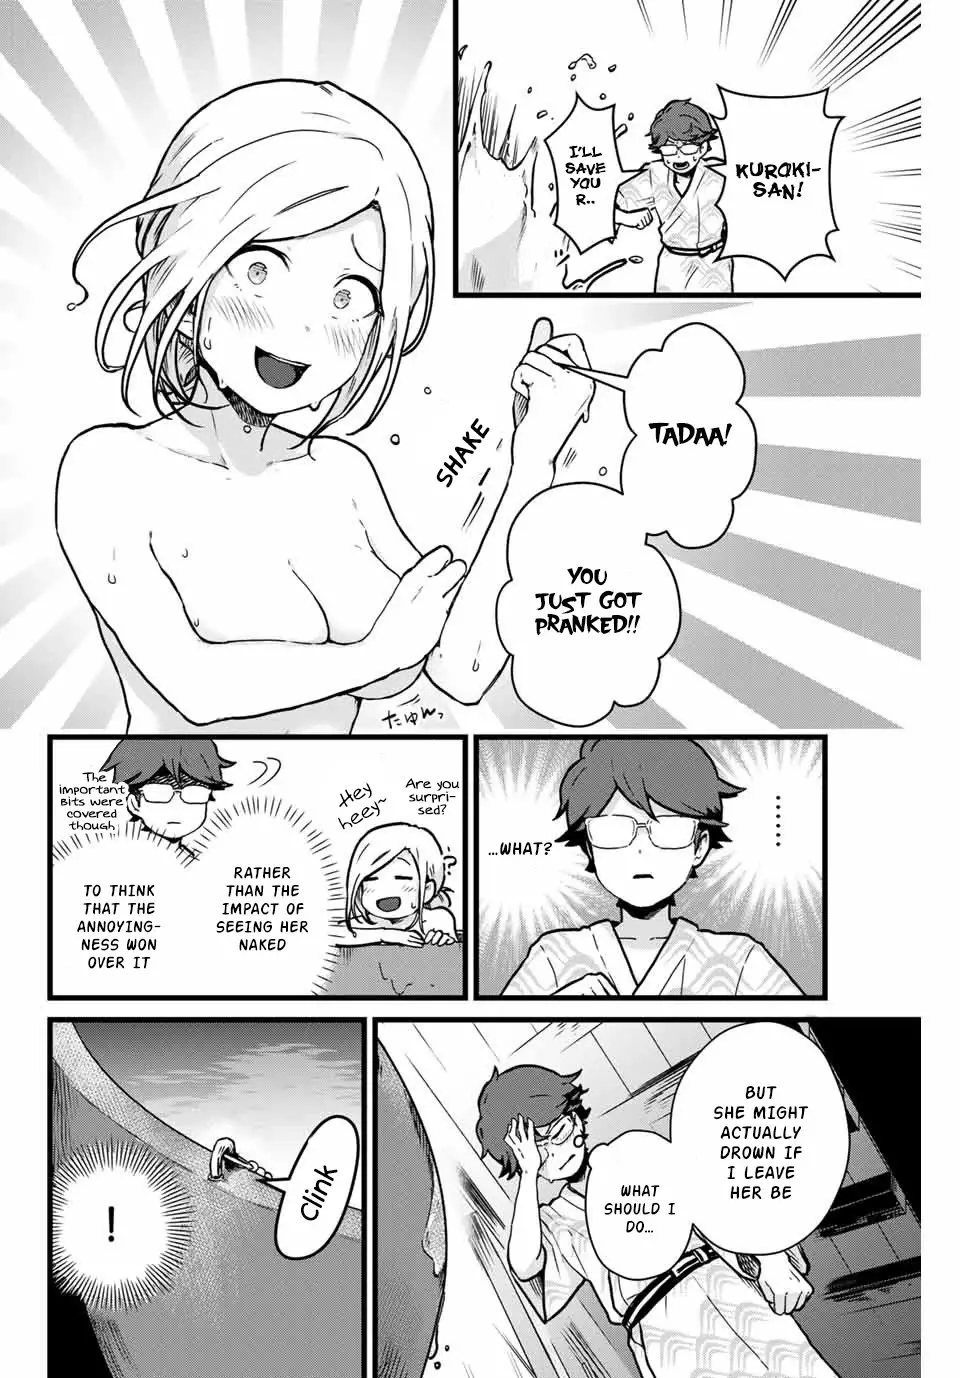 Next Door Kuroki-San Is Dangerous When She Drinks - 12 page 11-495c62ab